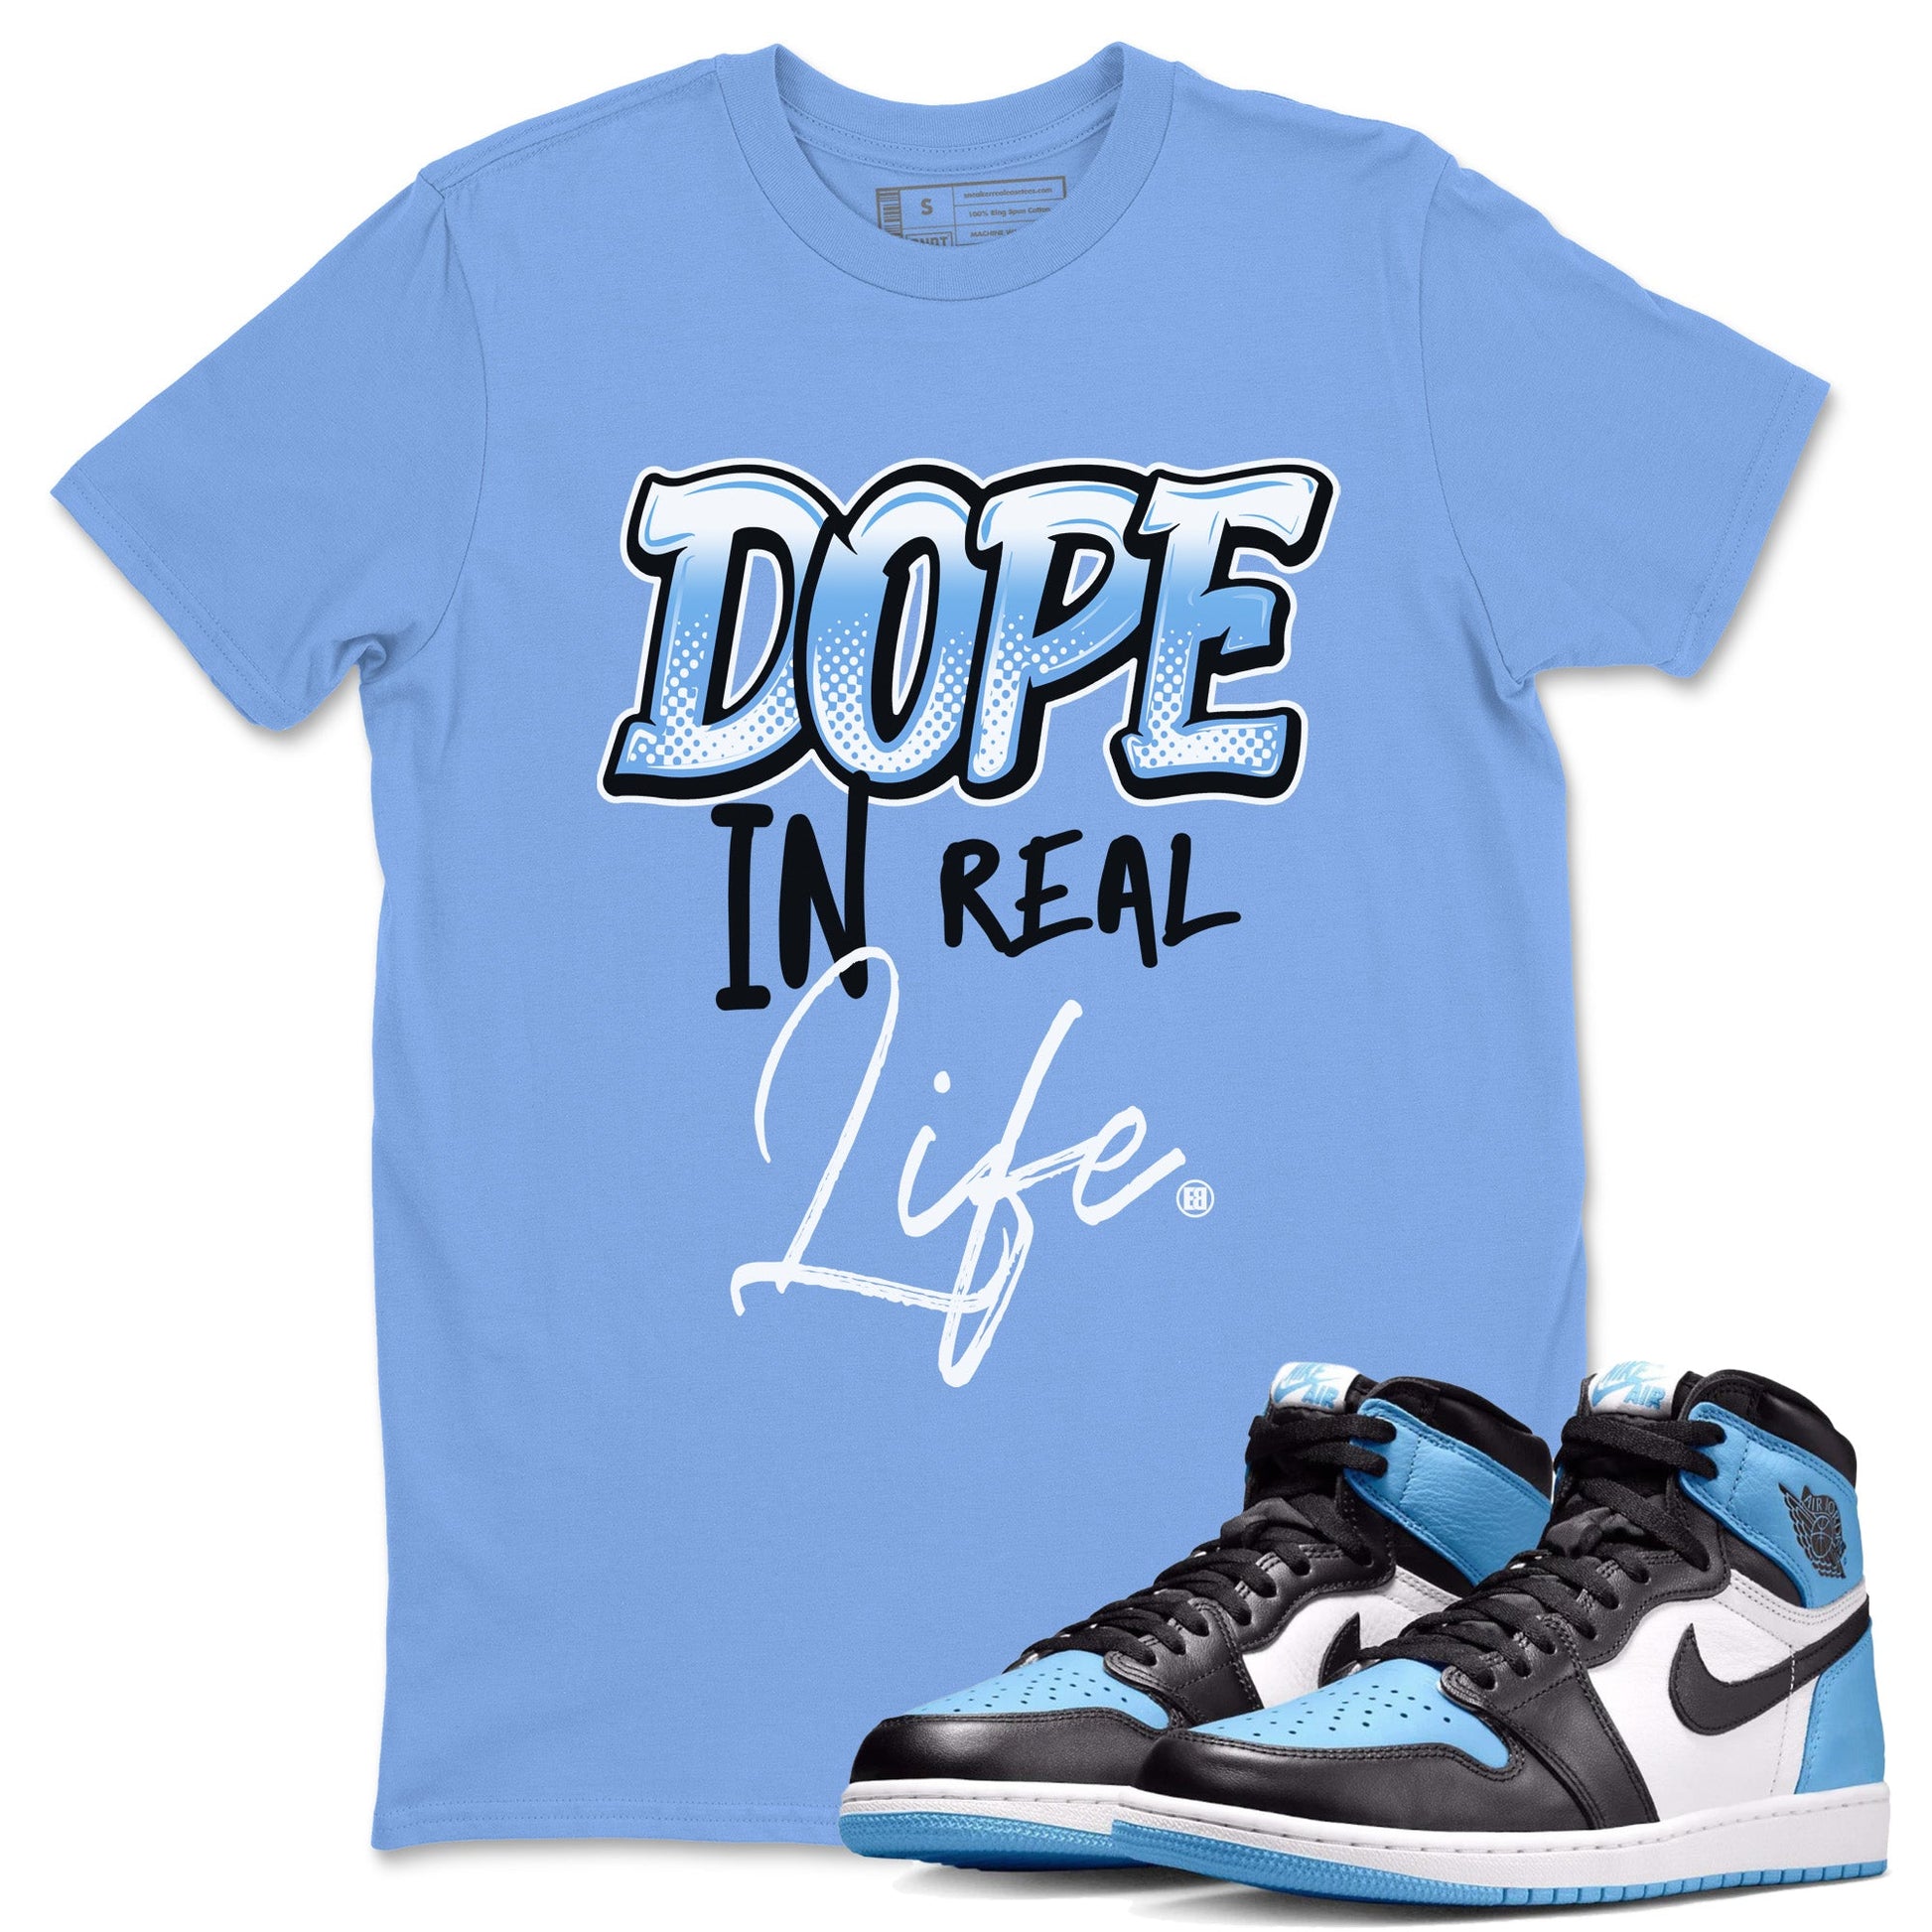 Air Jordan 1 Retro High OG UNC Toe Shirt to match Jordans Dope In Real Life Sneaker Tees Air Jordan 1 High OG UNC Toe SNRT Sneaker Release Tees Crew Neck T-Shirts Carolina Blue 1